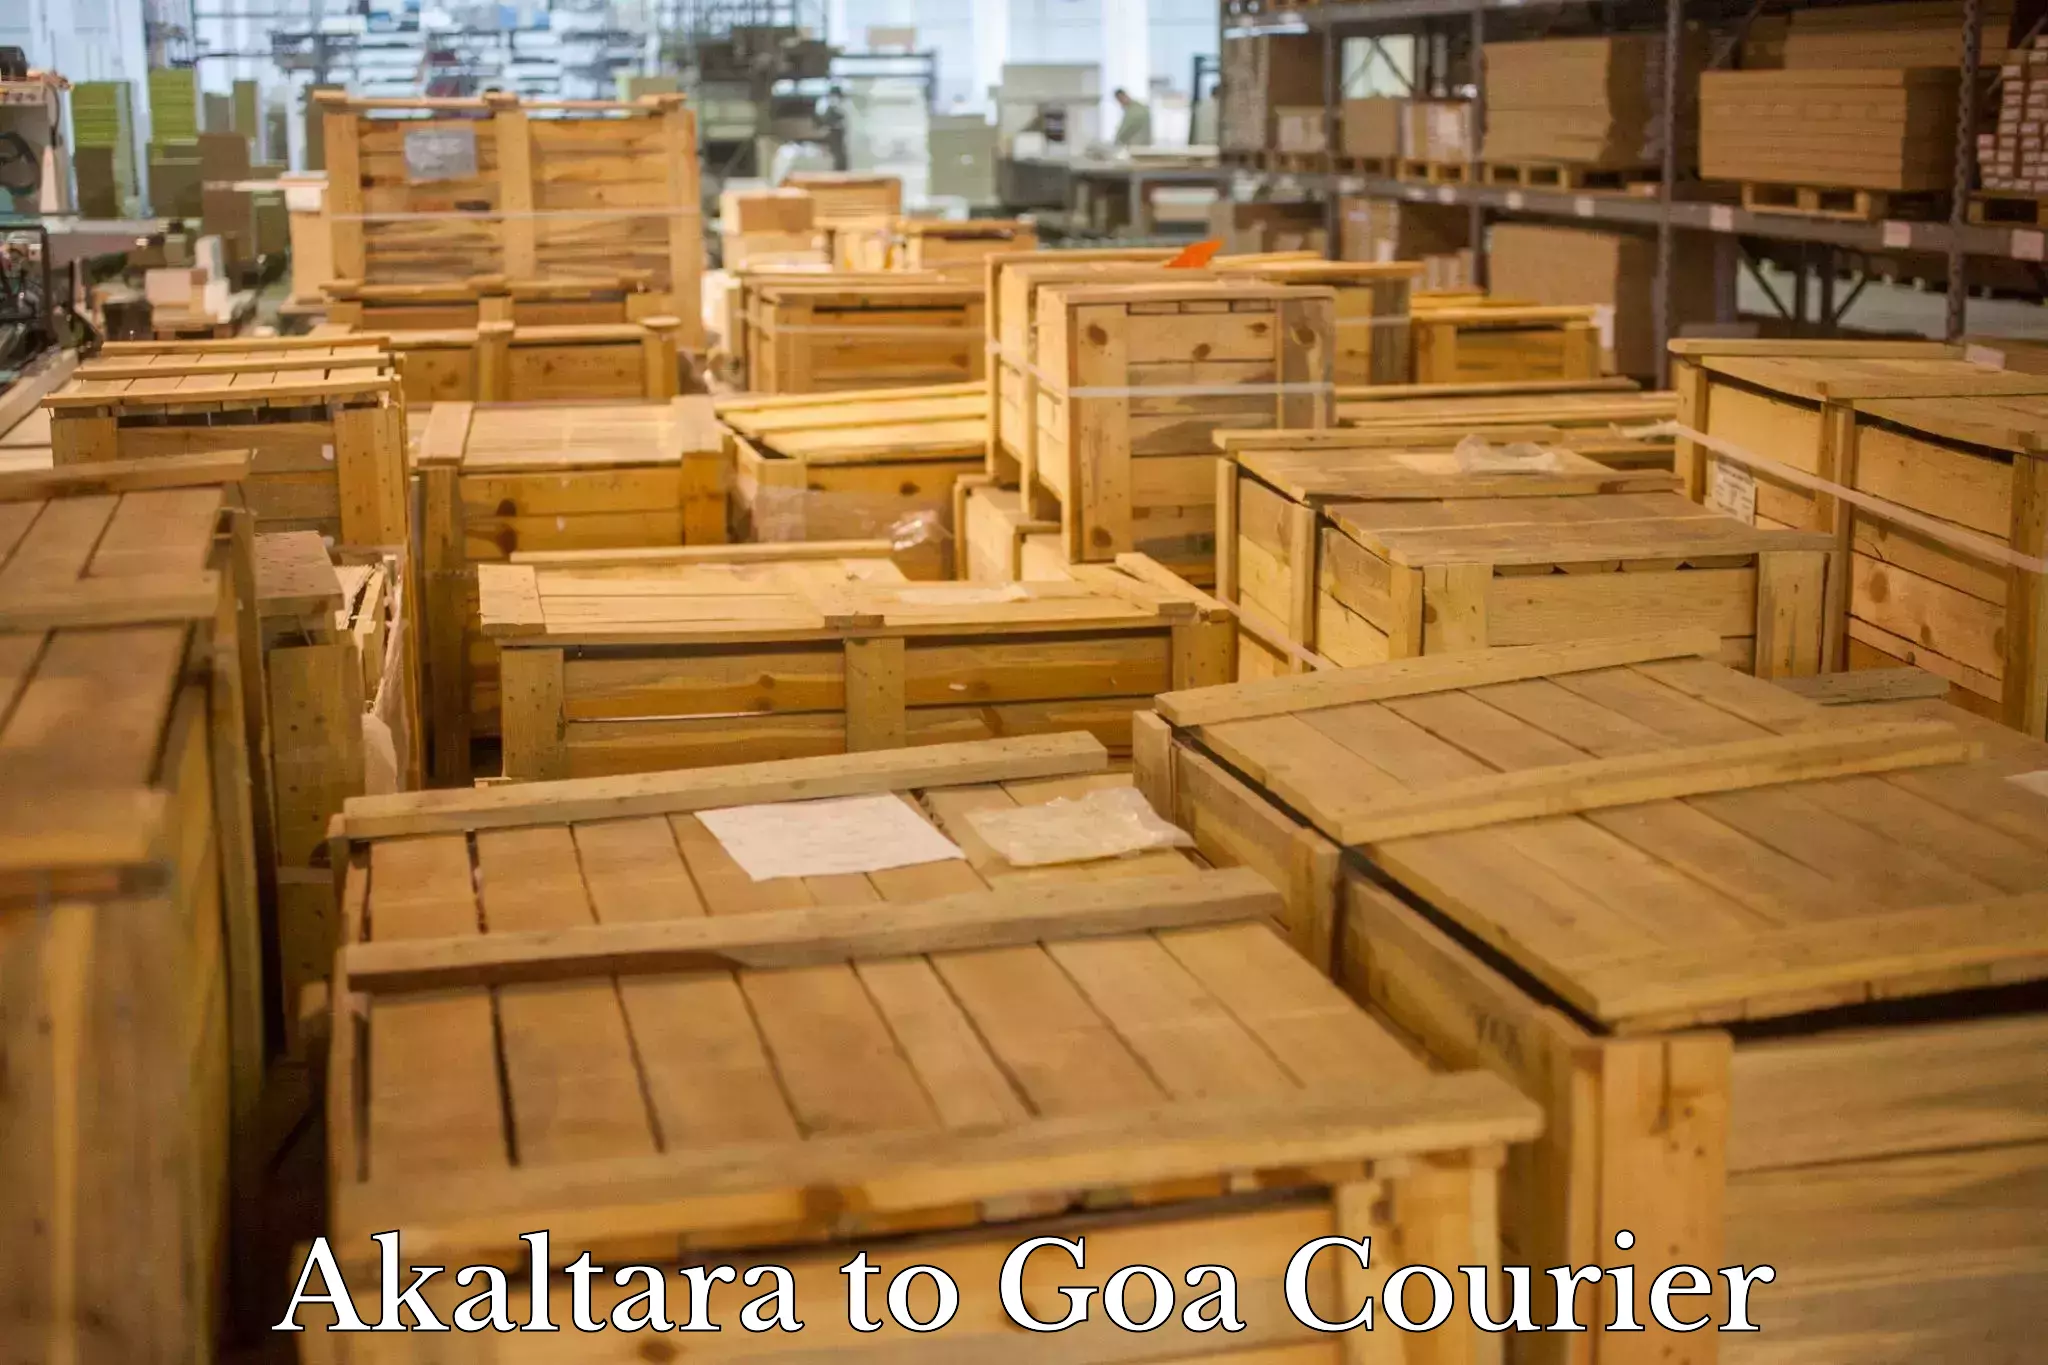 International courier networks Akaltara to Goa